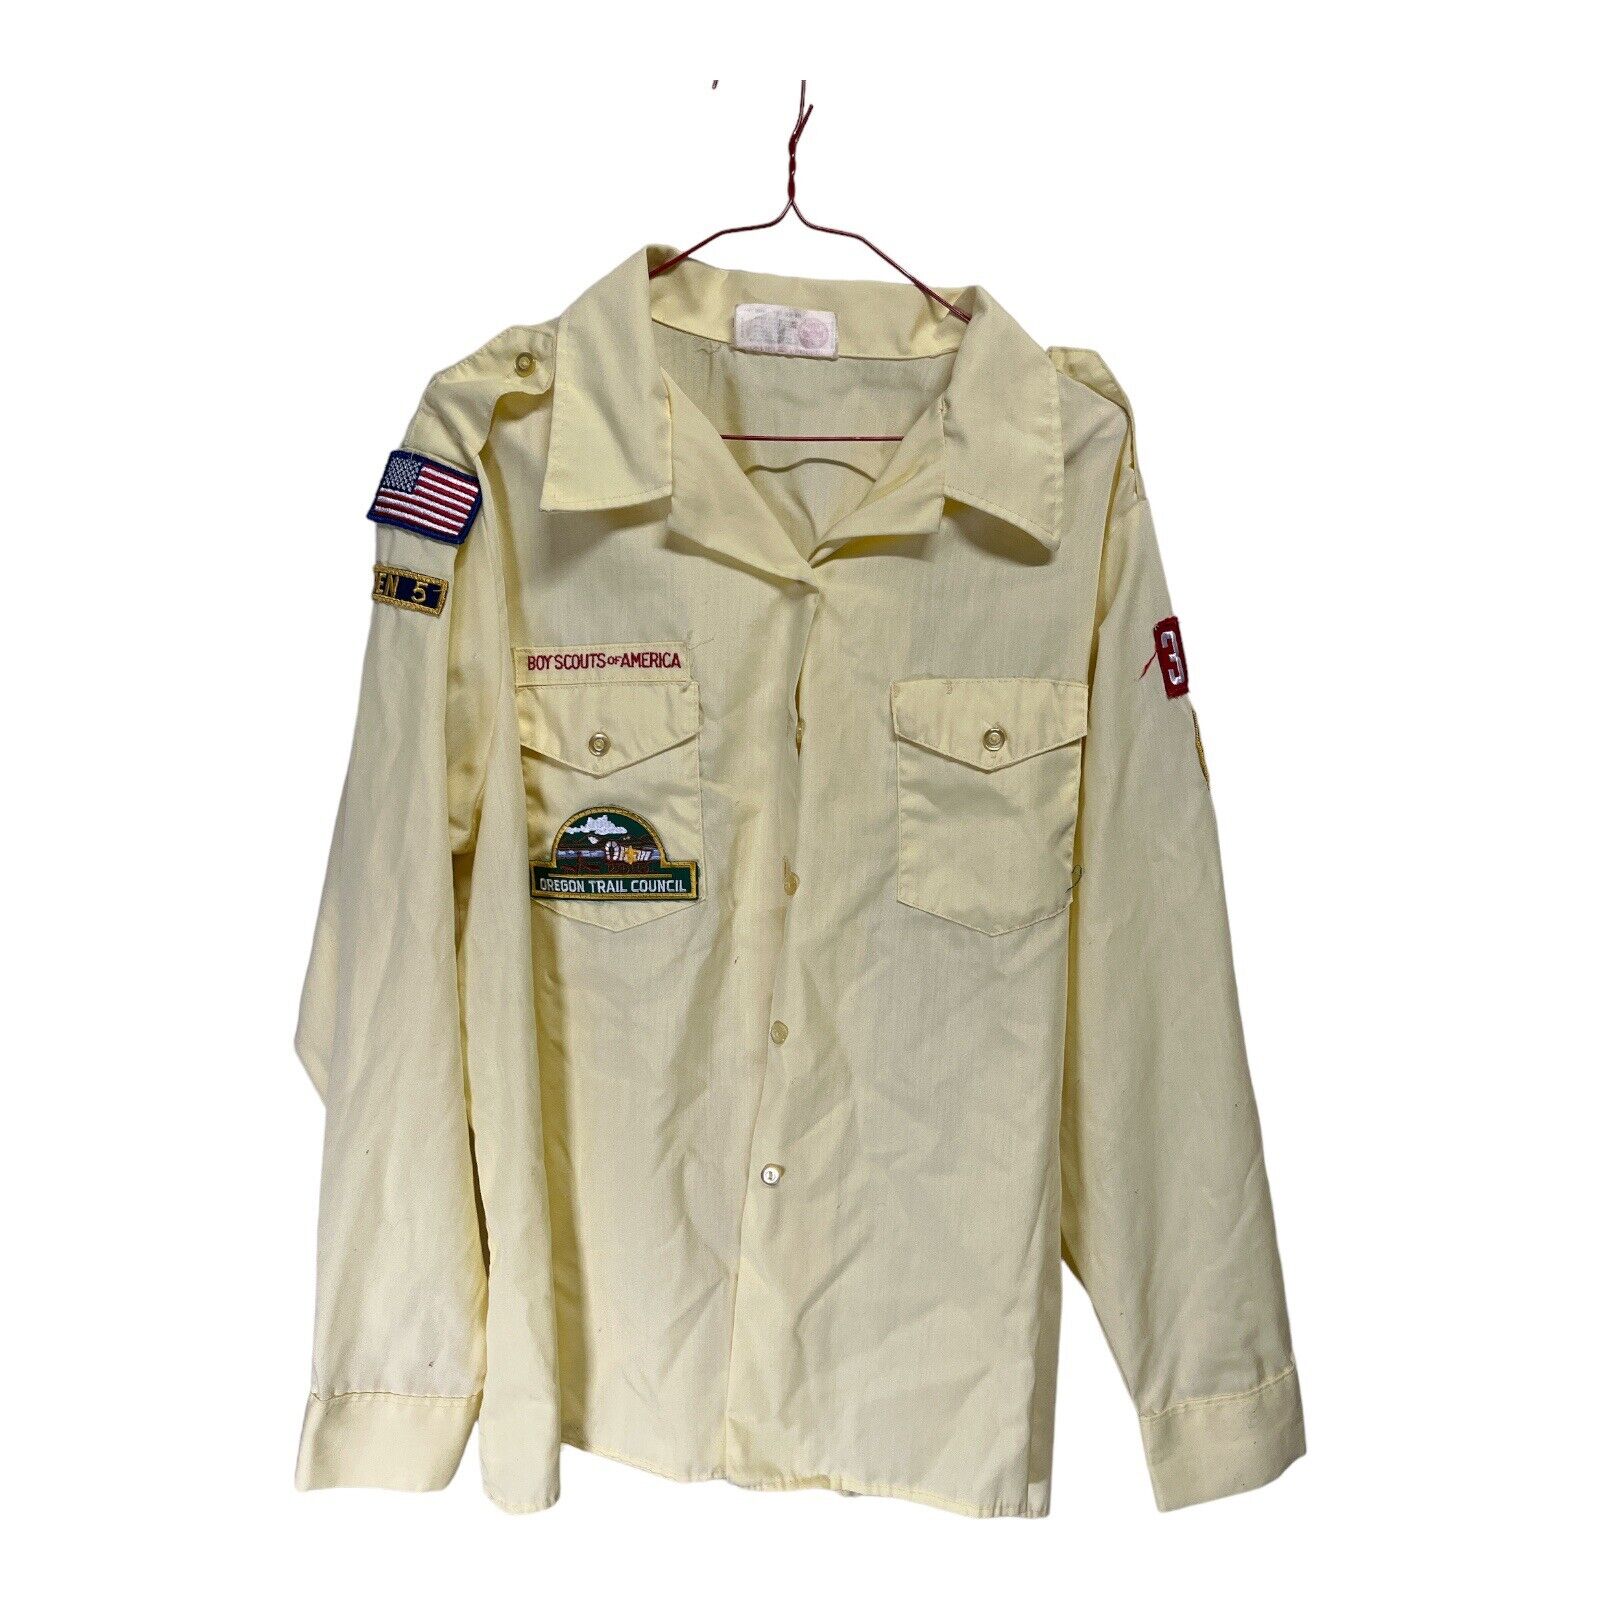 Vtg Boy Scouts of America Adult Sz 38-40 Button up shirt yellow Long sleeve BSA